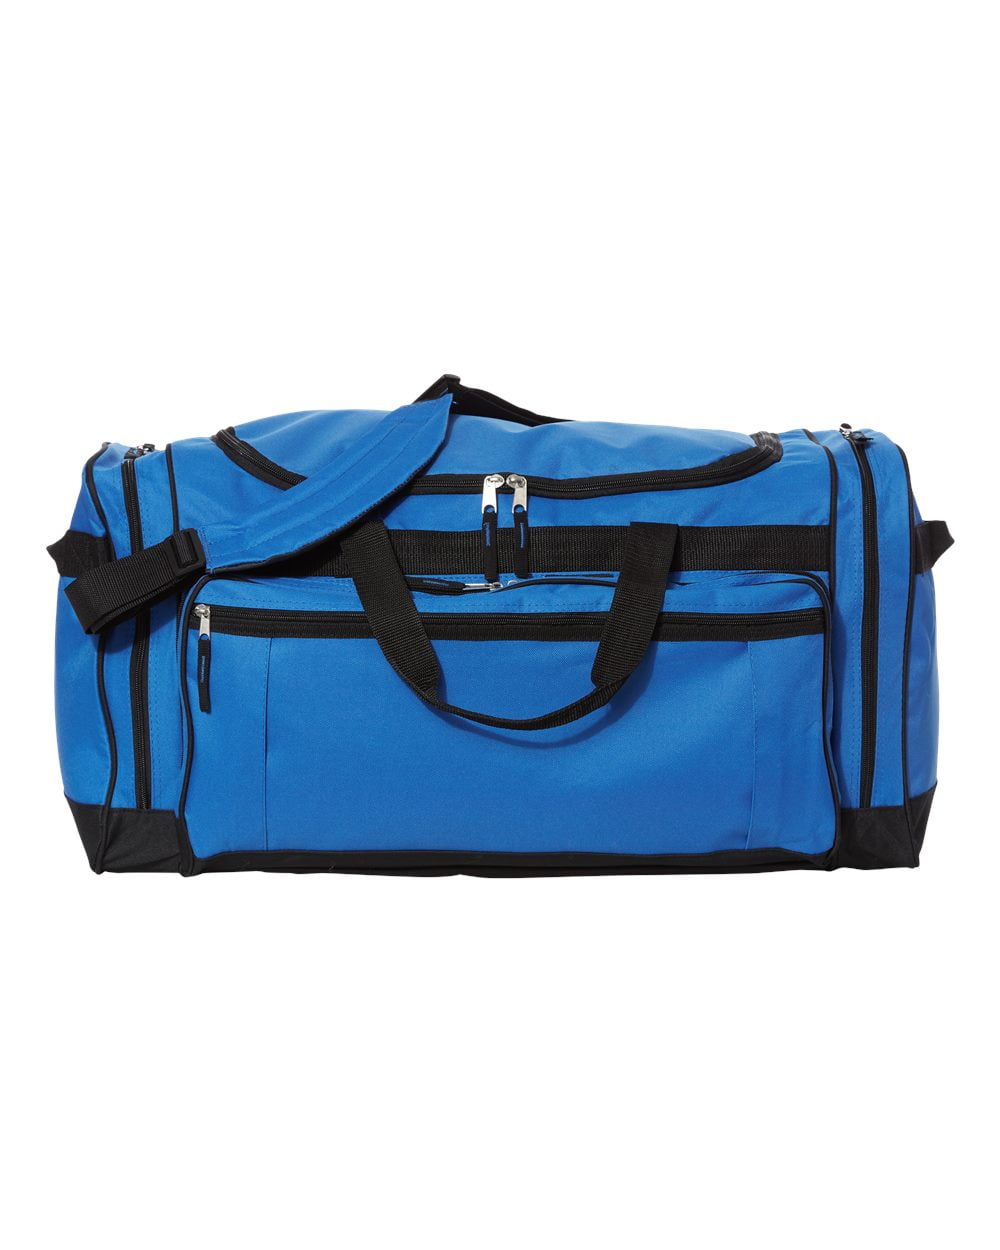 YueLJB Galaxy Trumpet Art Lightweight Large Capacity Portable Luggage Bag Travel Duffel Bag Storage Carry Luggage Duffle Tote Bag